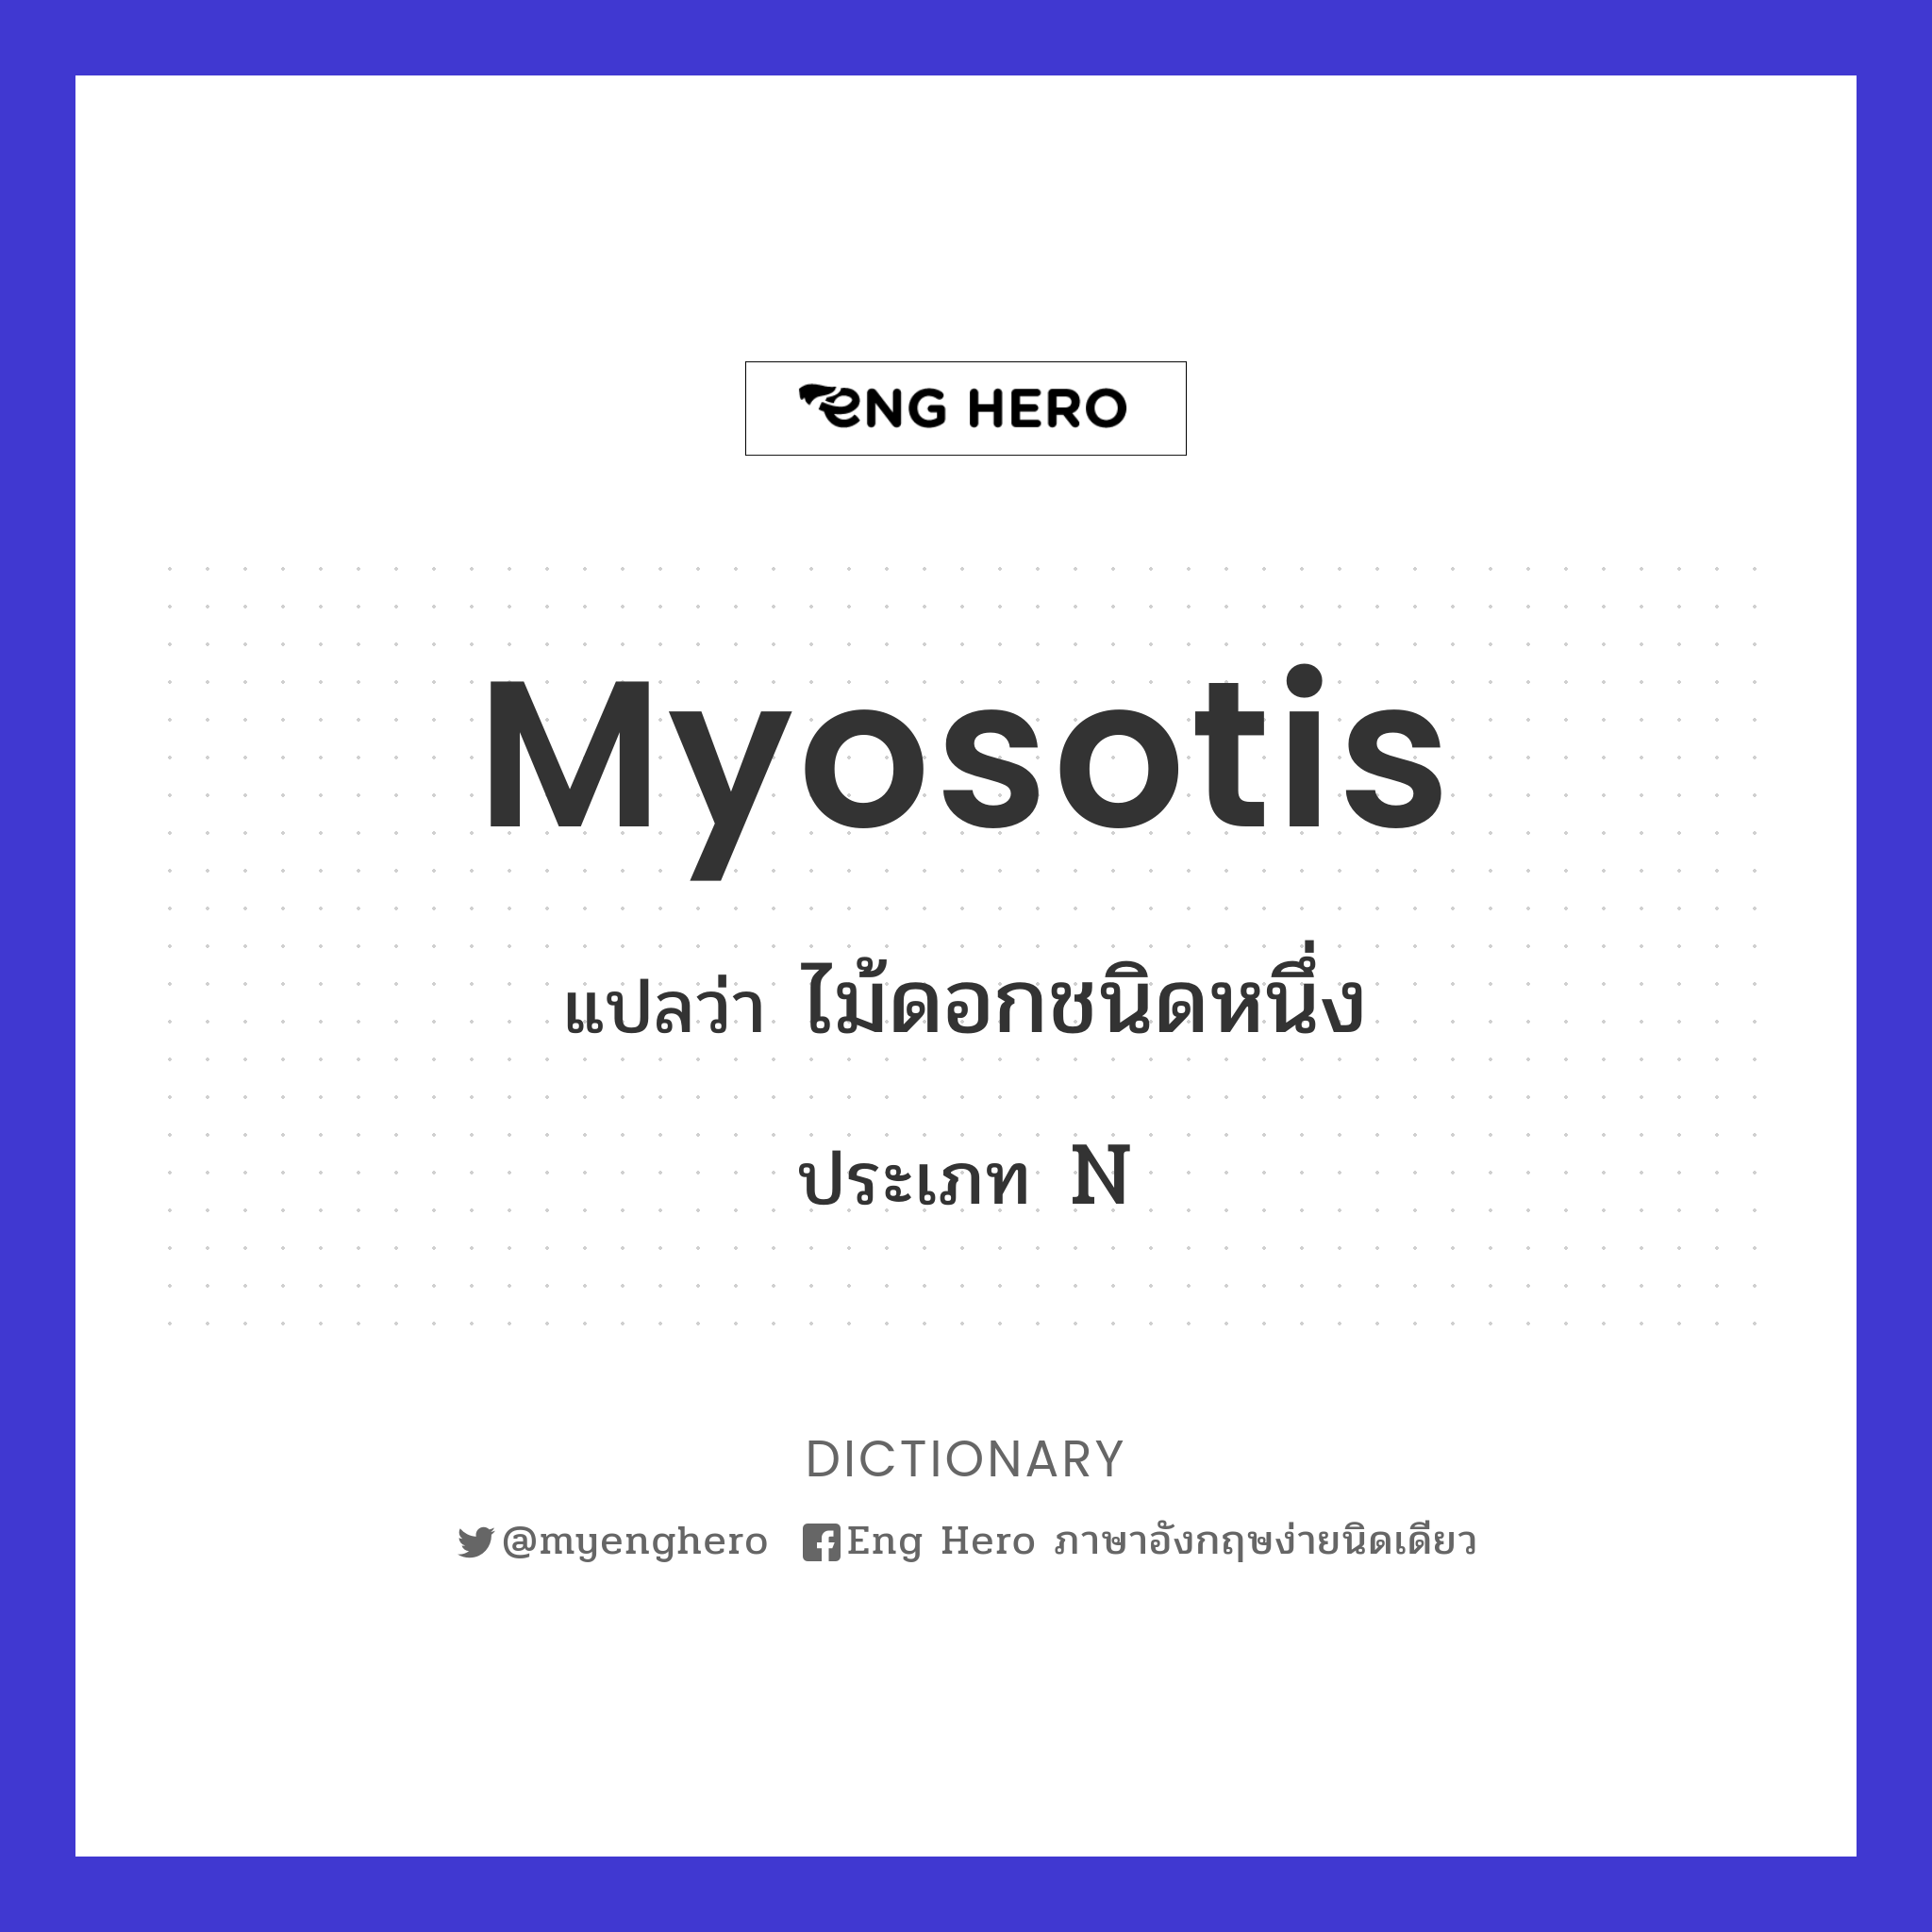 myosotis